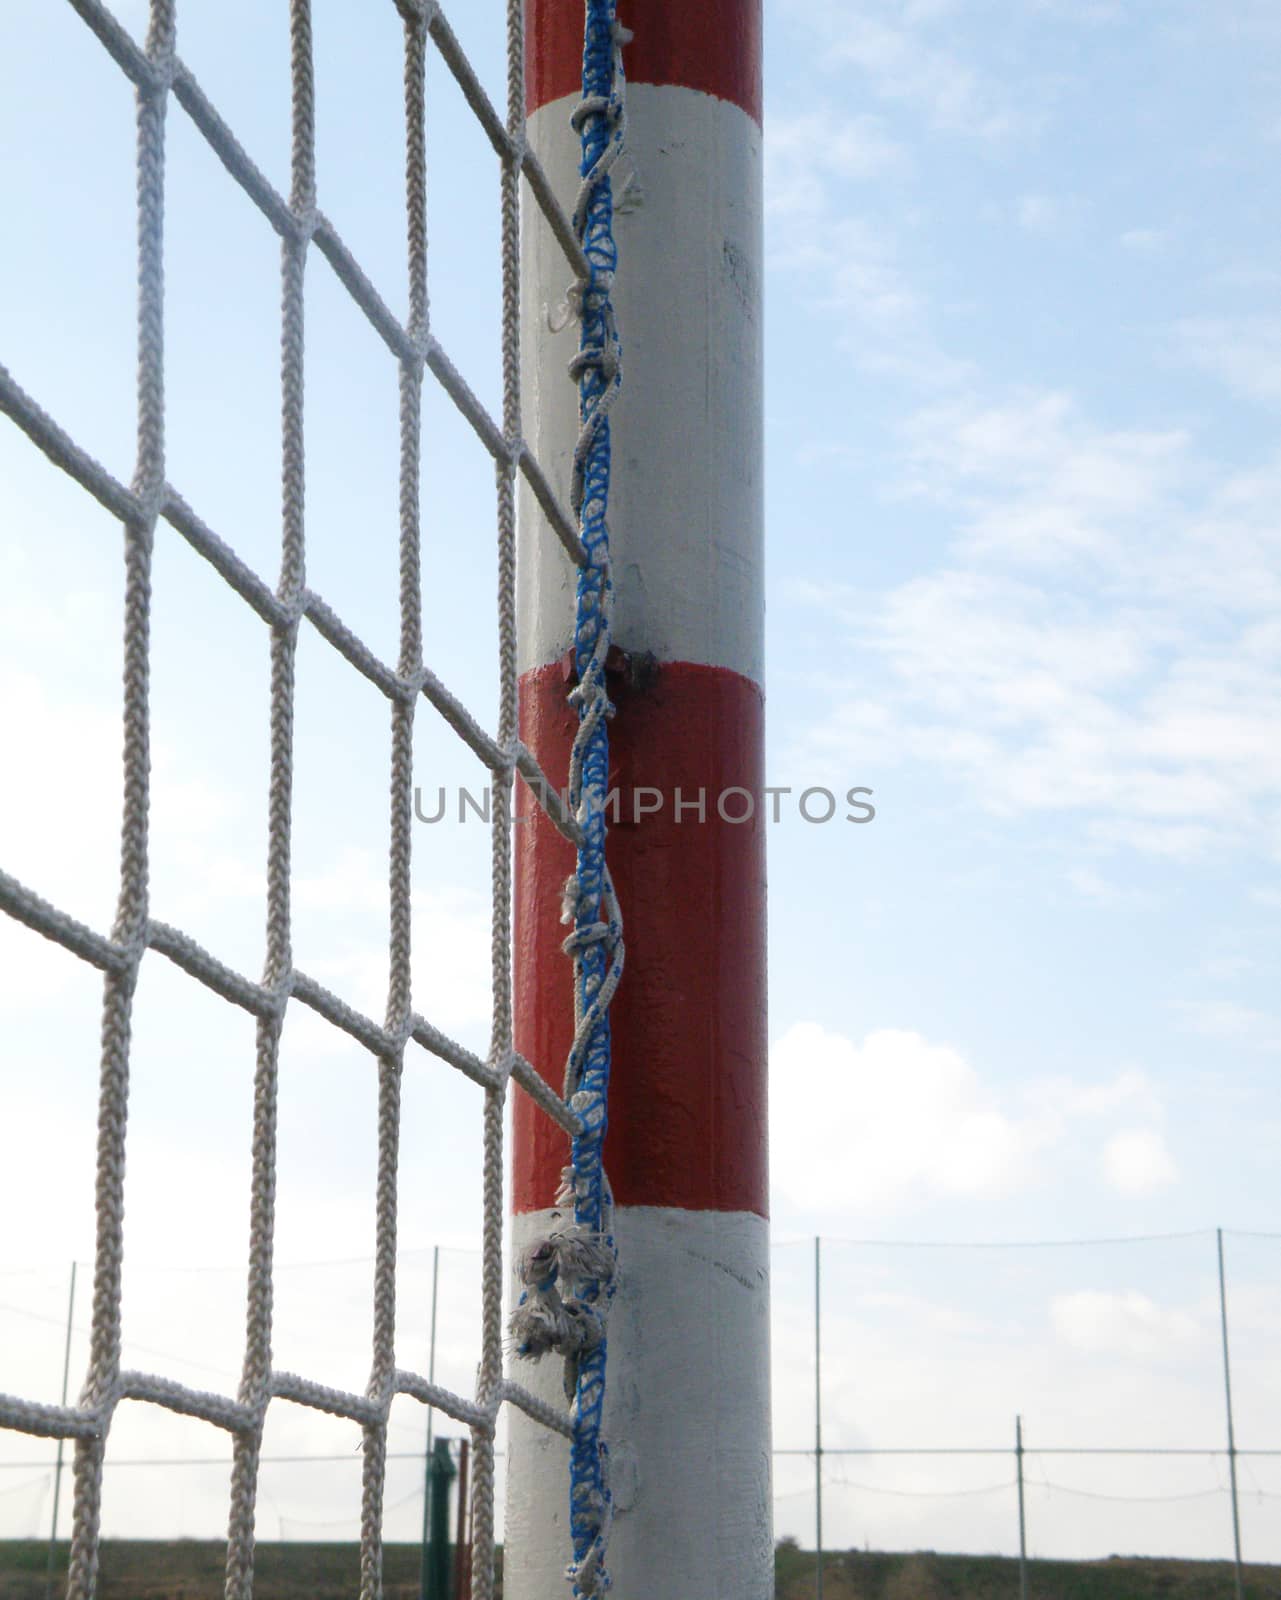 goalpost by artbox